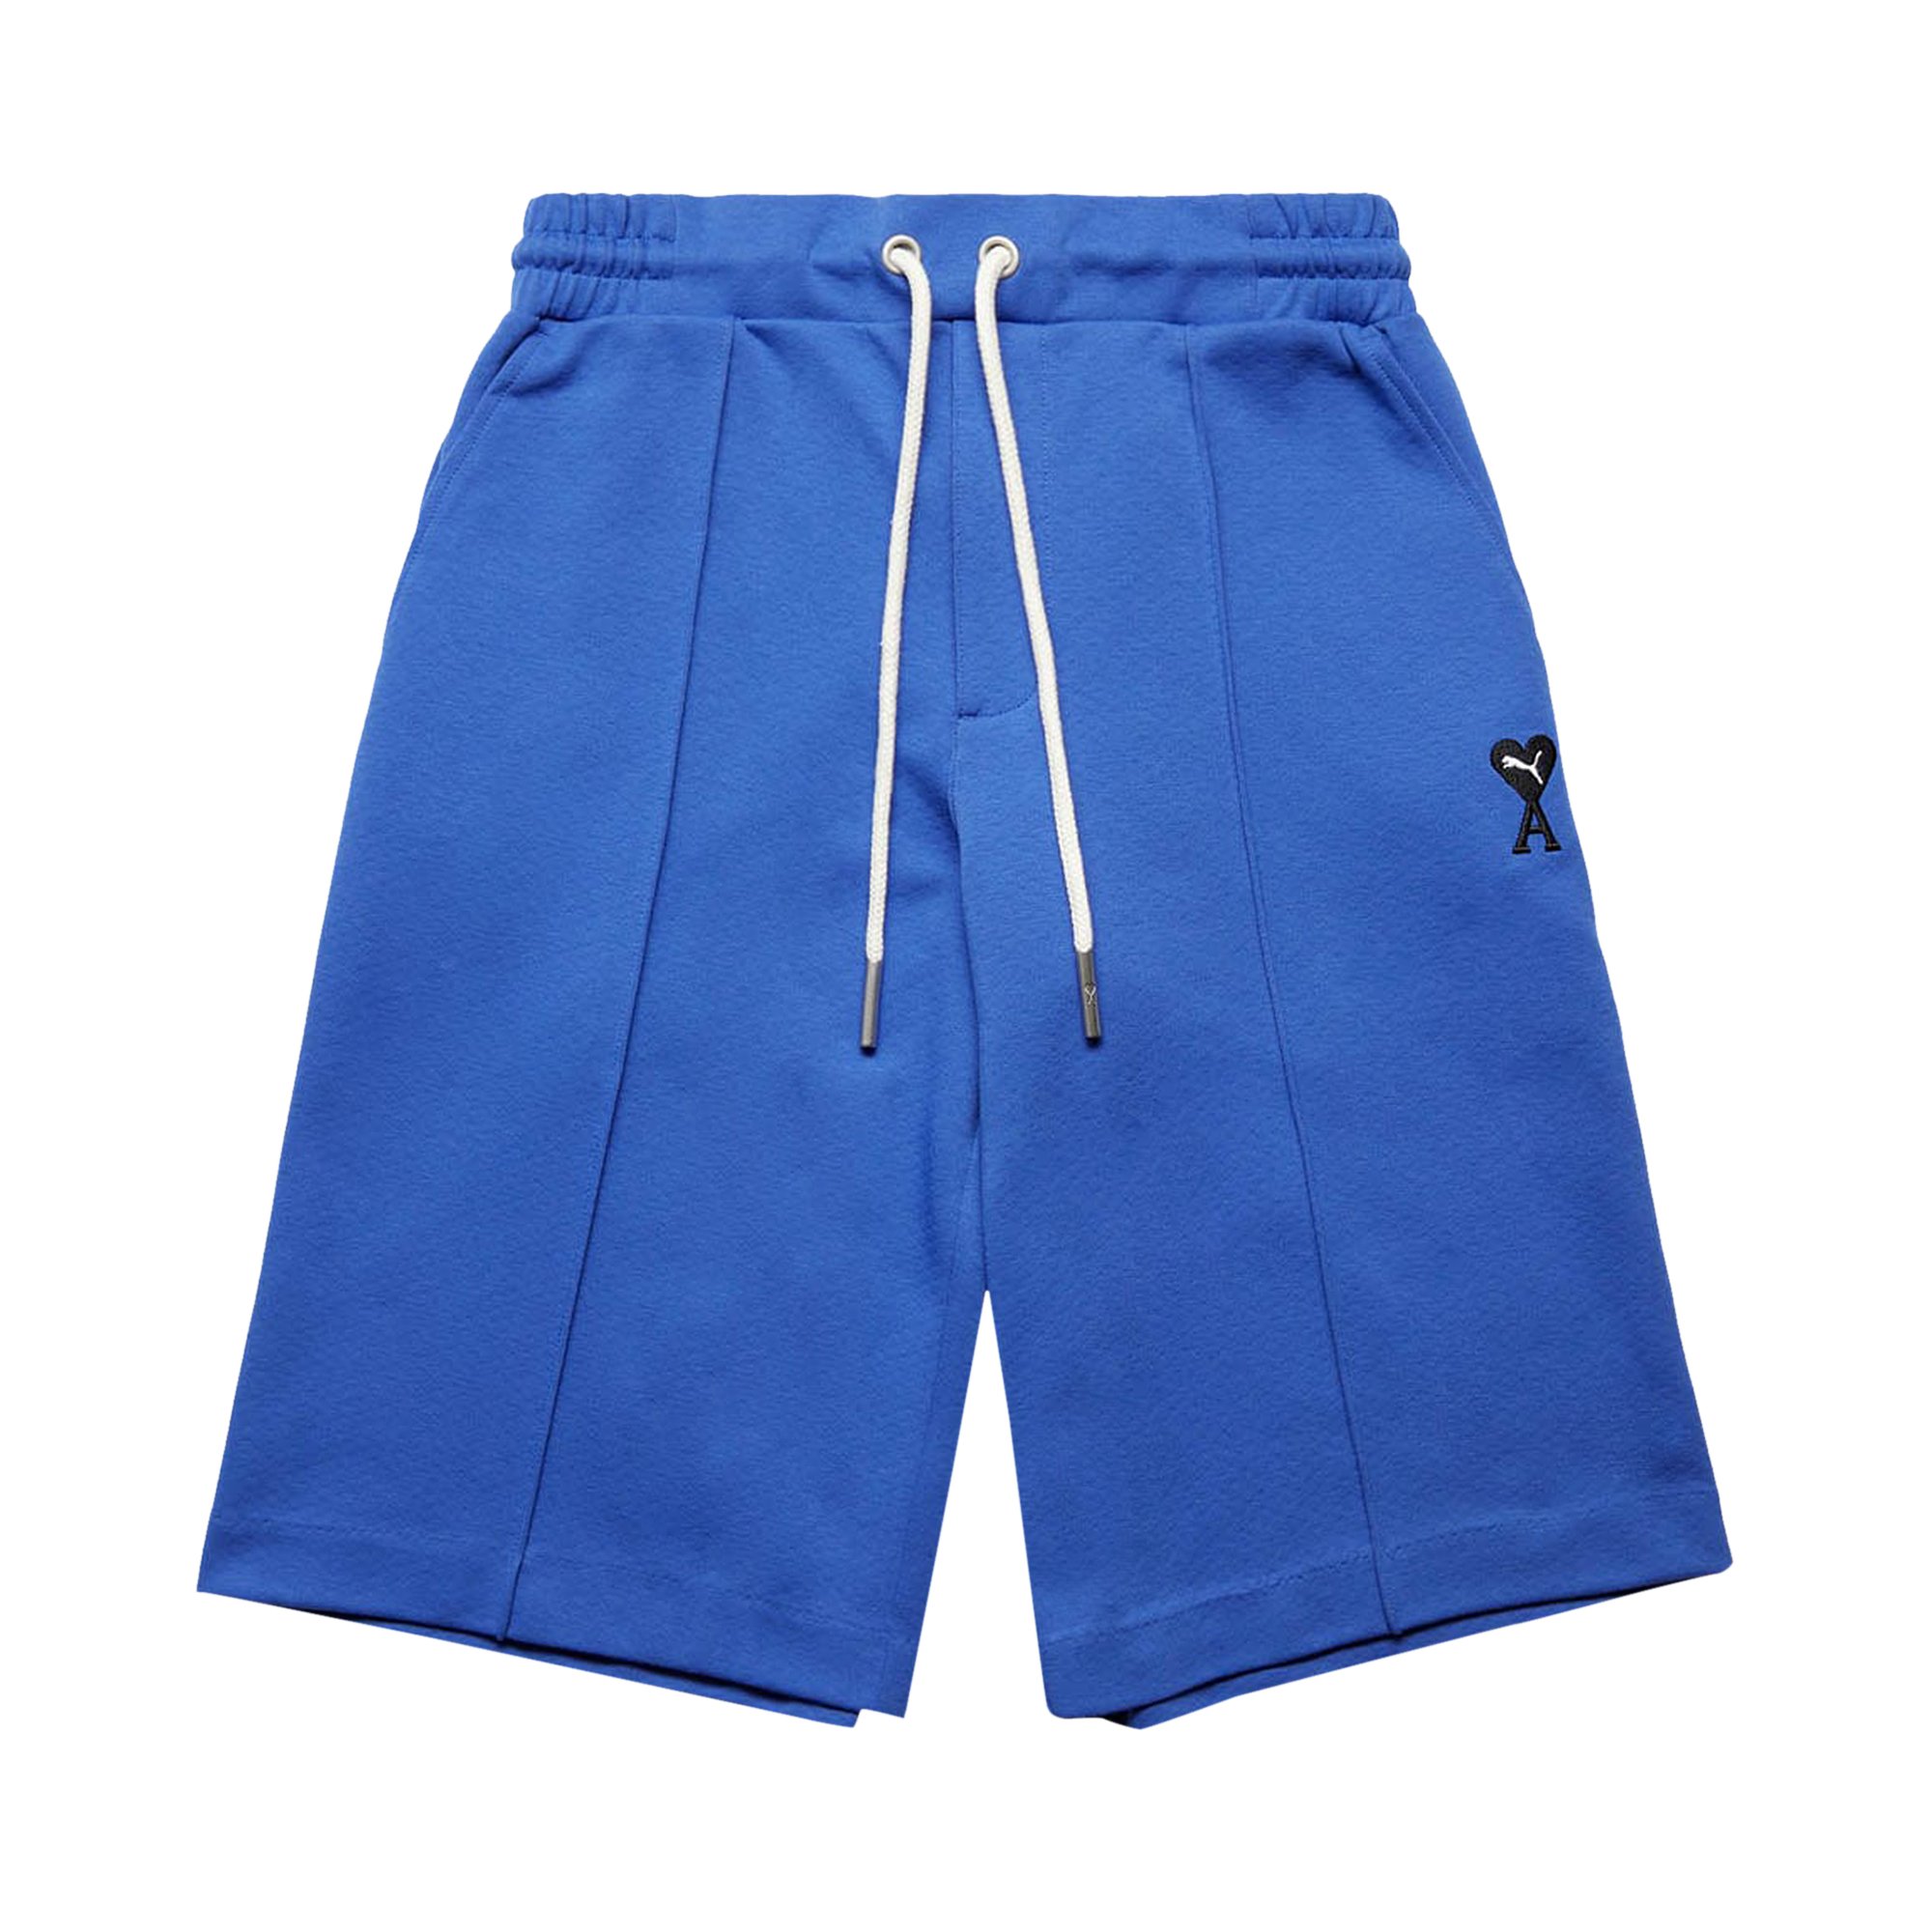 Buy Puma x Ami Shorts 'Dazzling Blue' - 53407193 DAZZ | GOAT